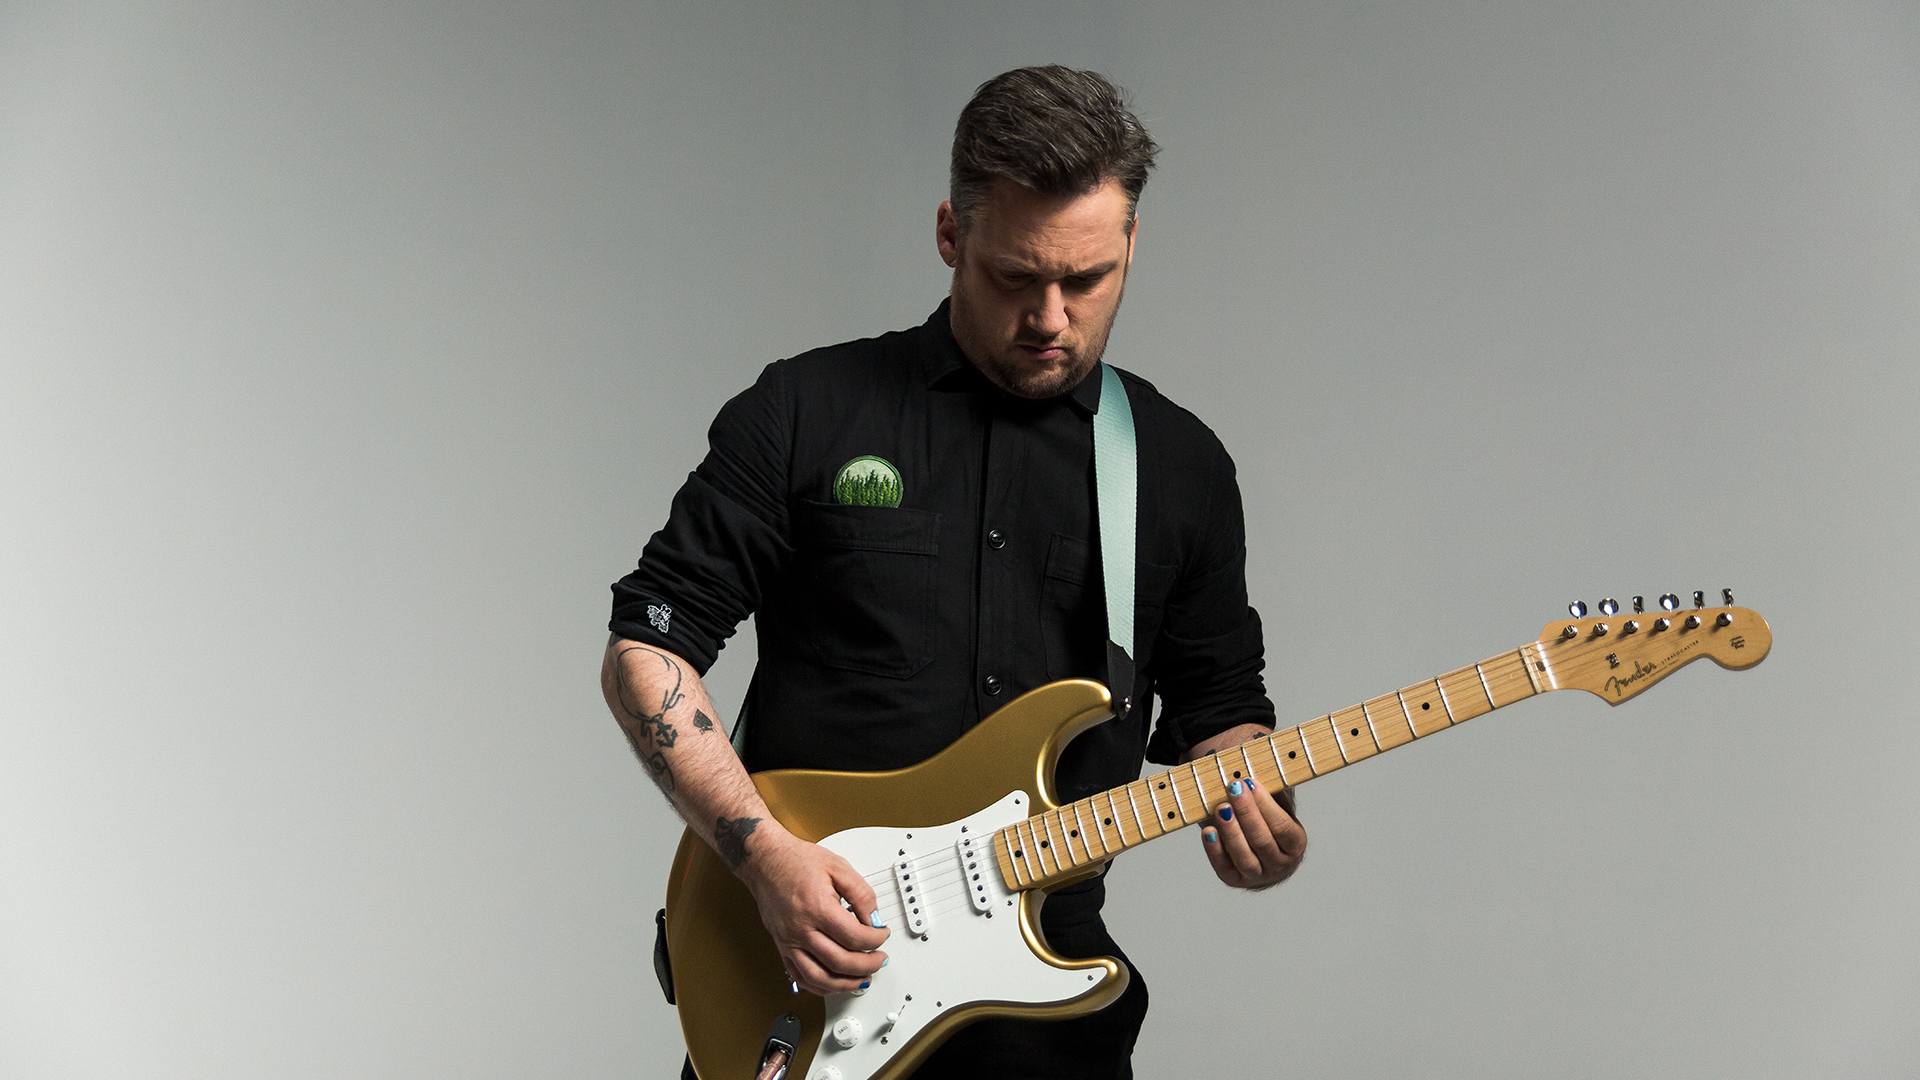 Fender artist playing guitar